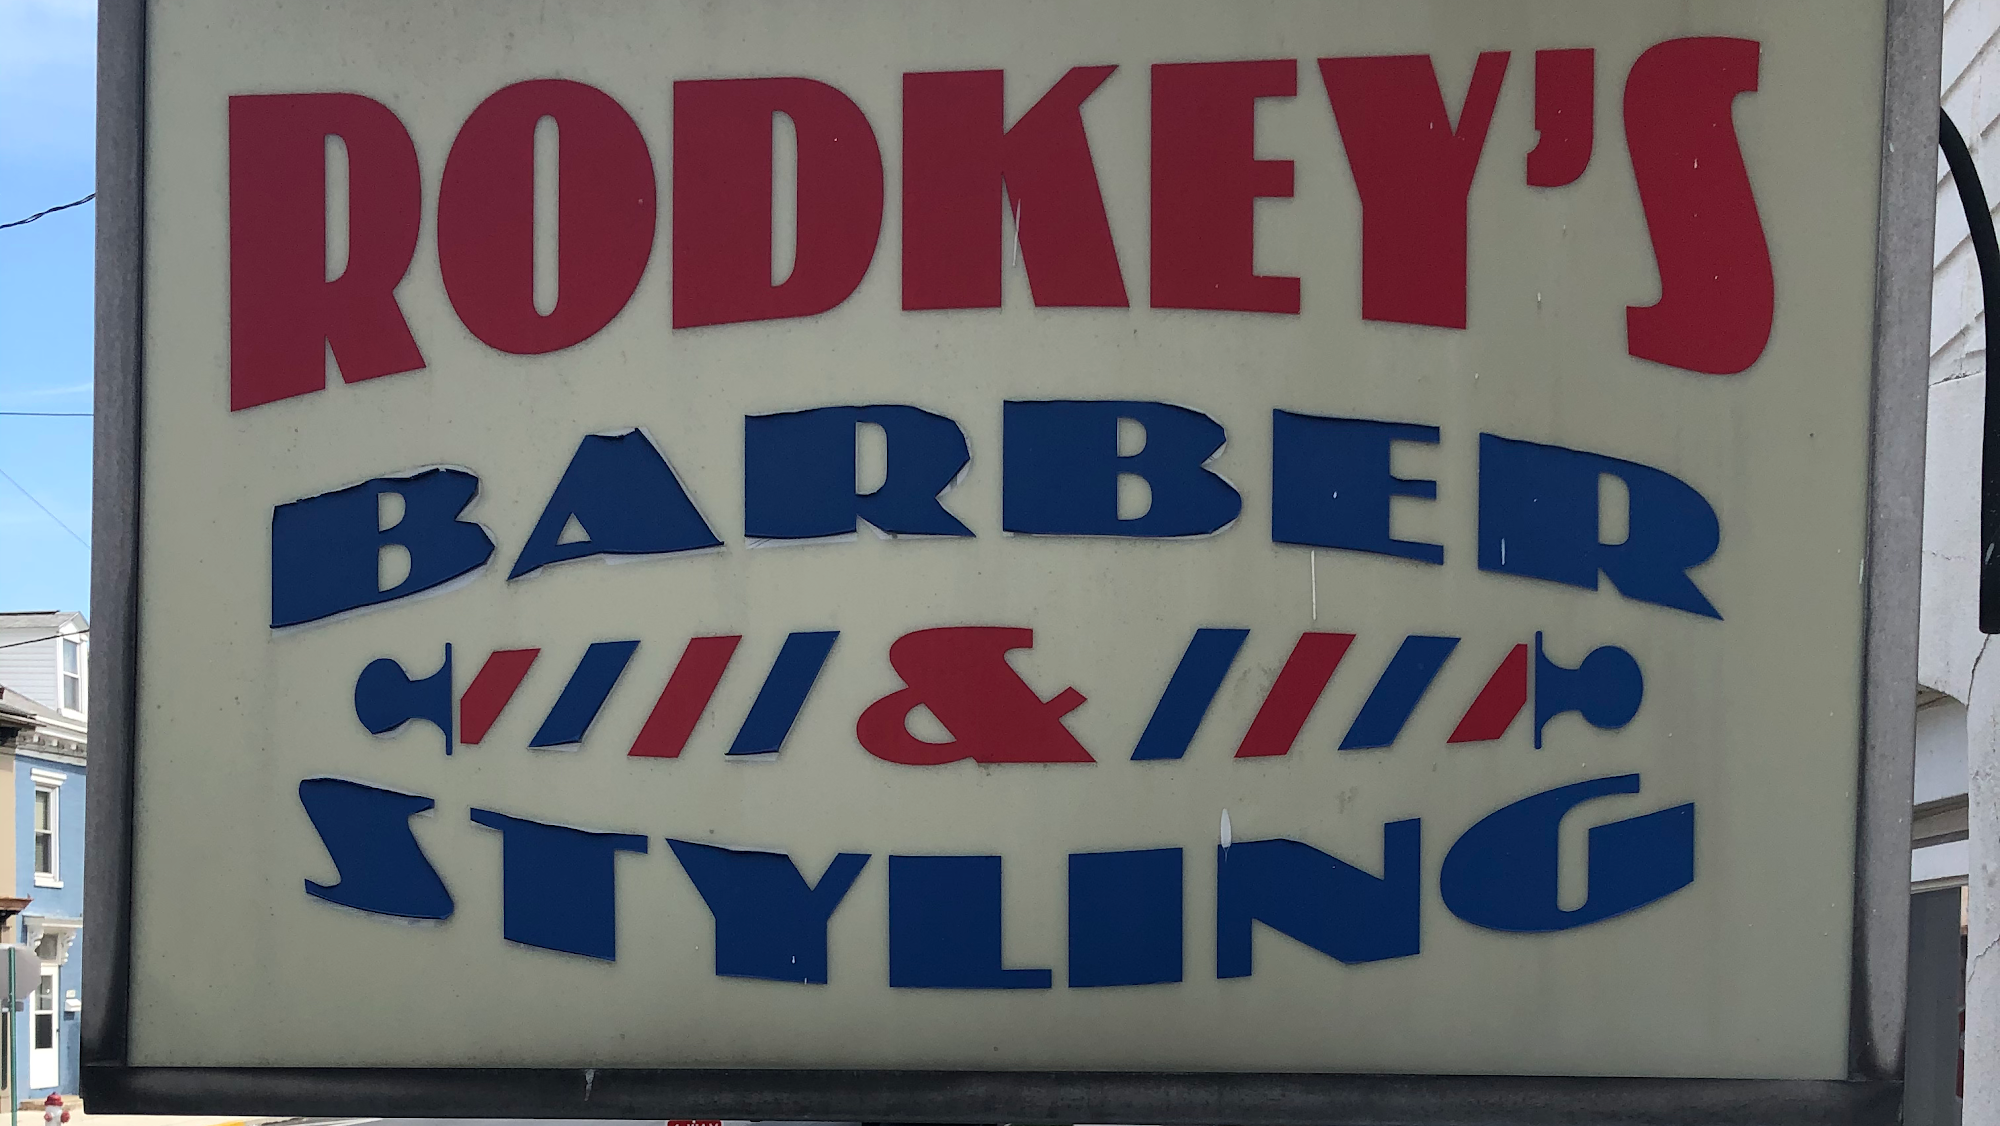 Rodkey's Barbering & Styling